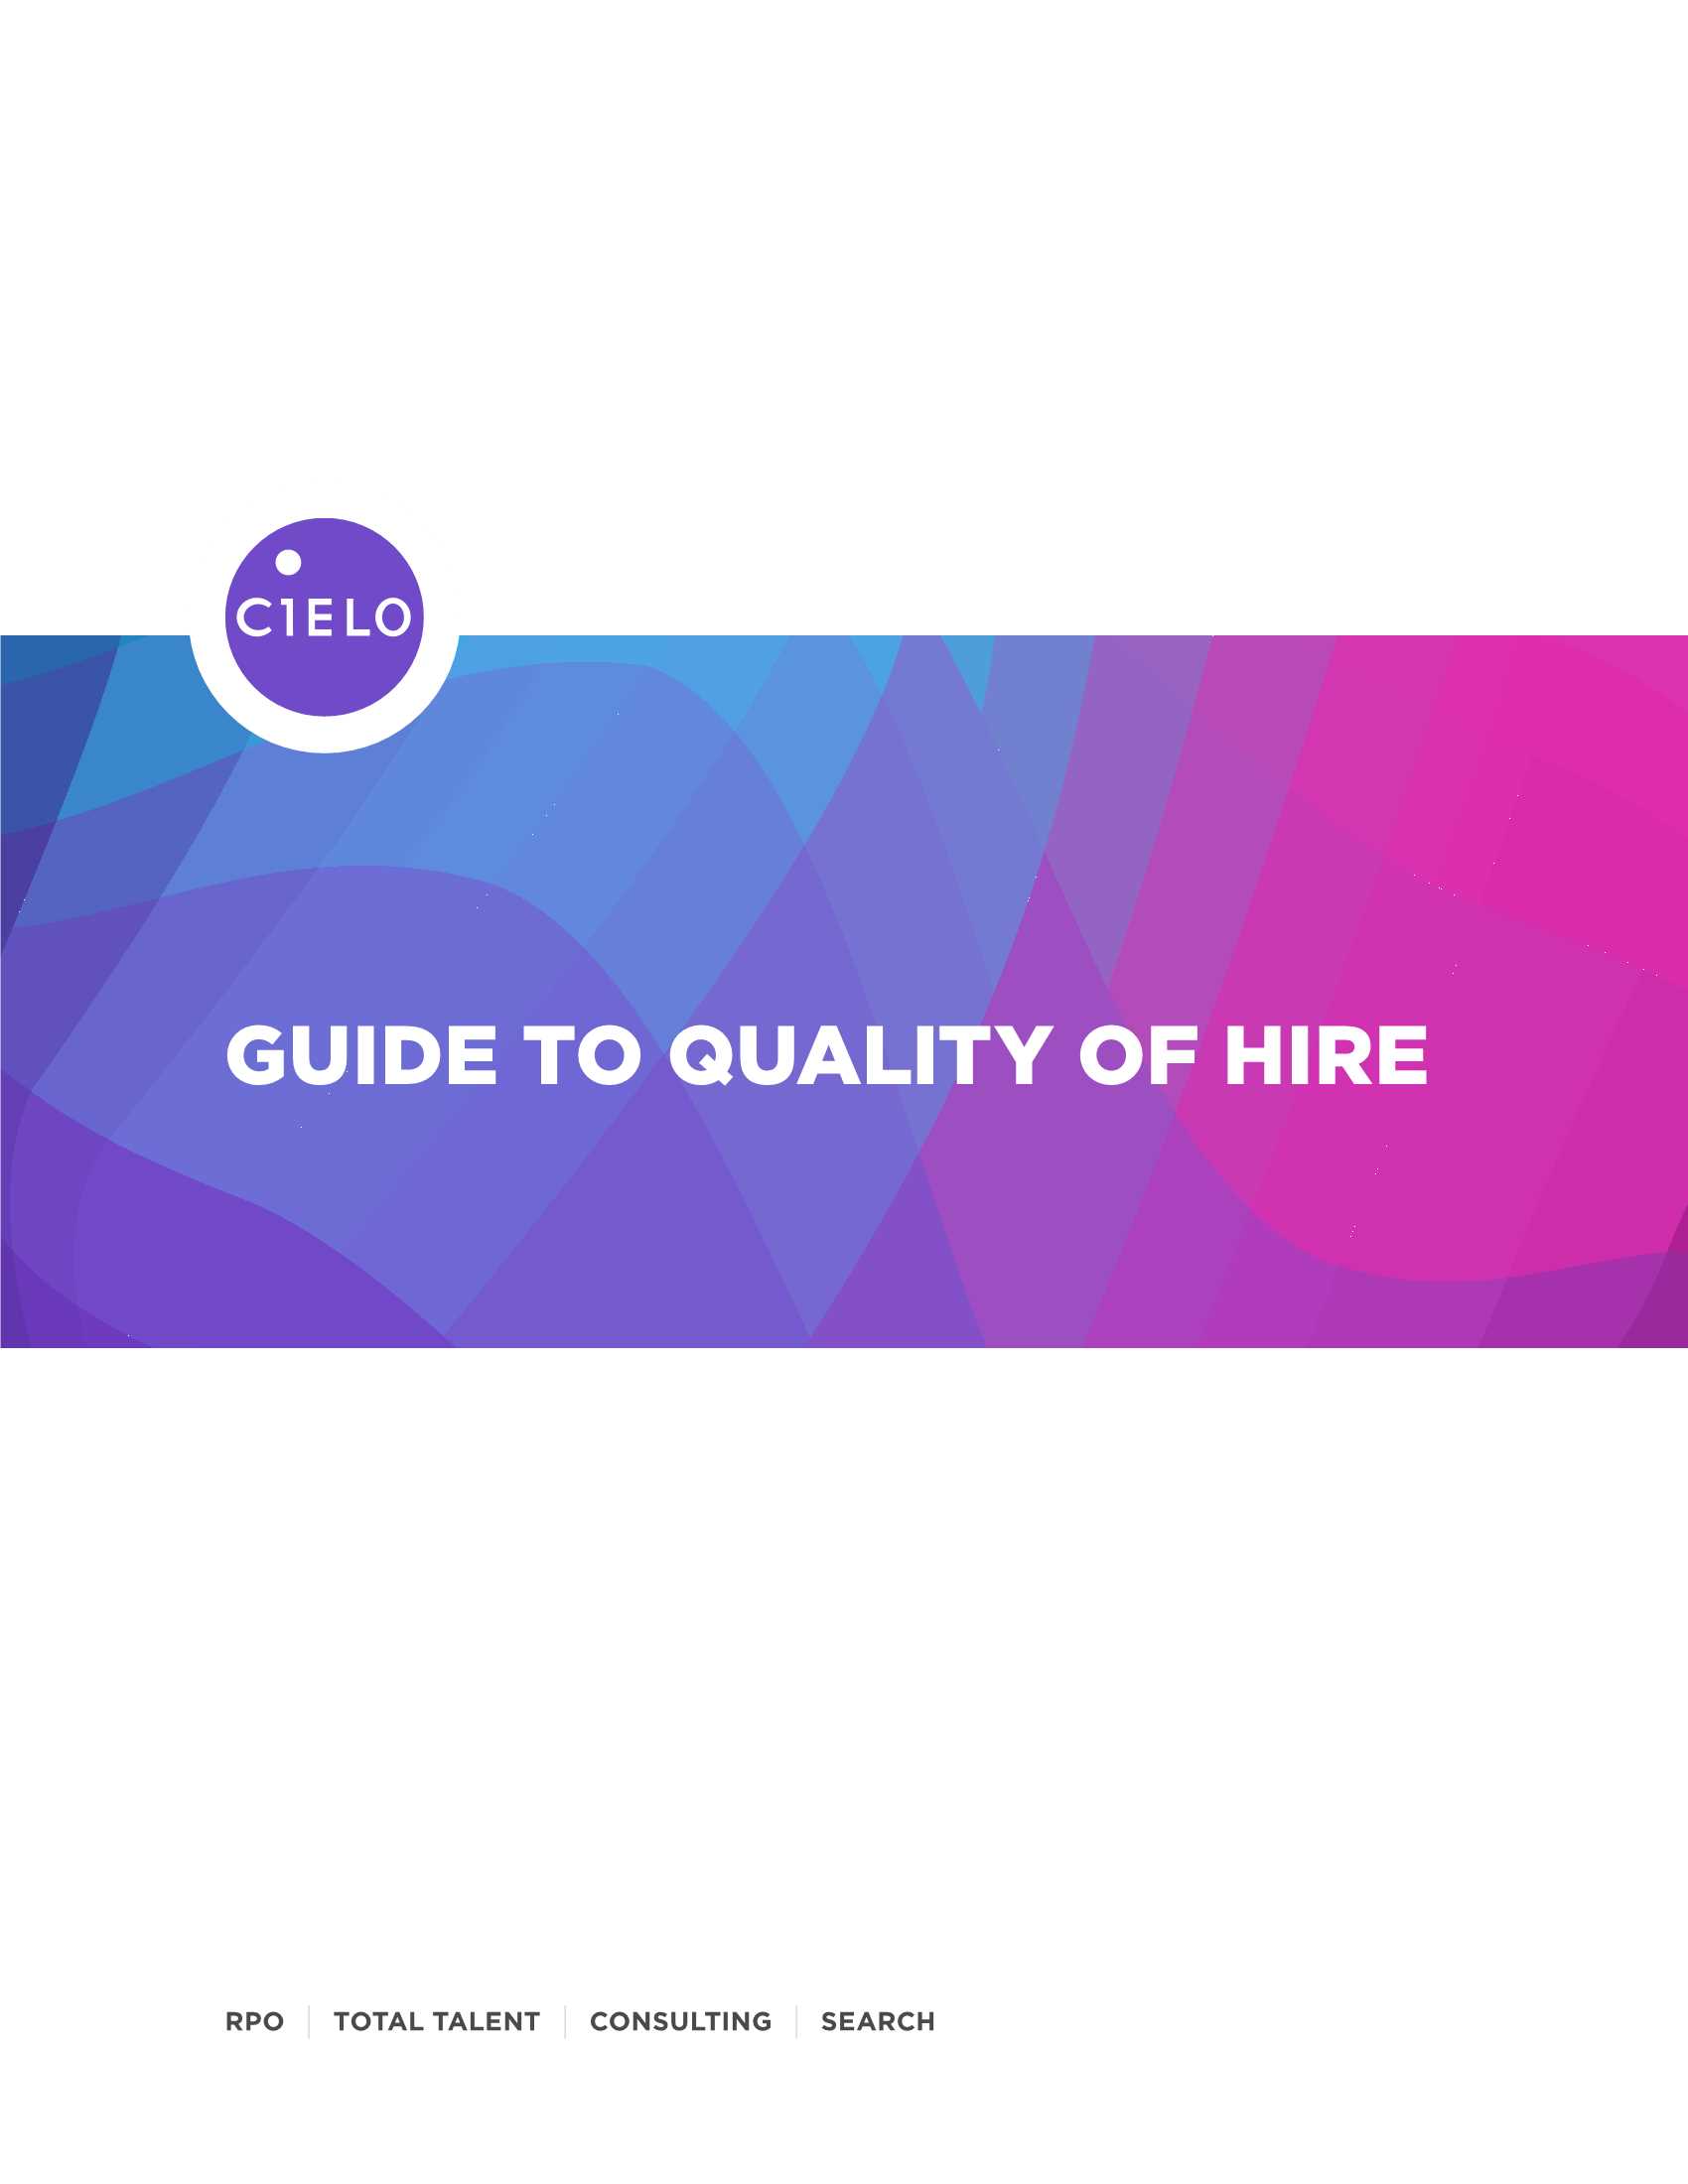 雇佣质量指南 Guide to Quality of Hire-2021.10-15页